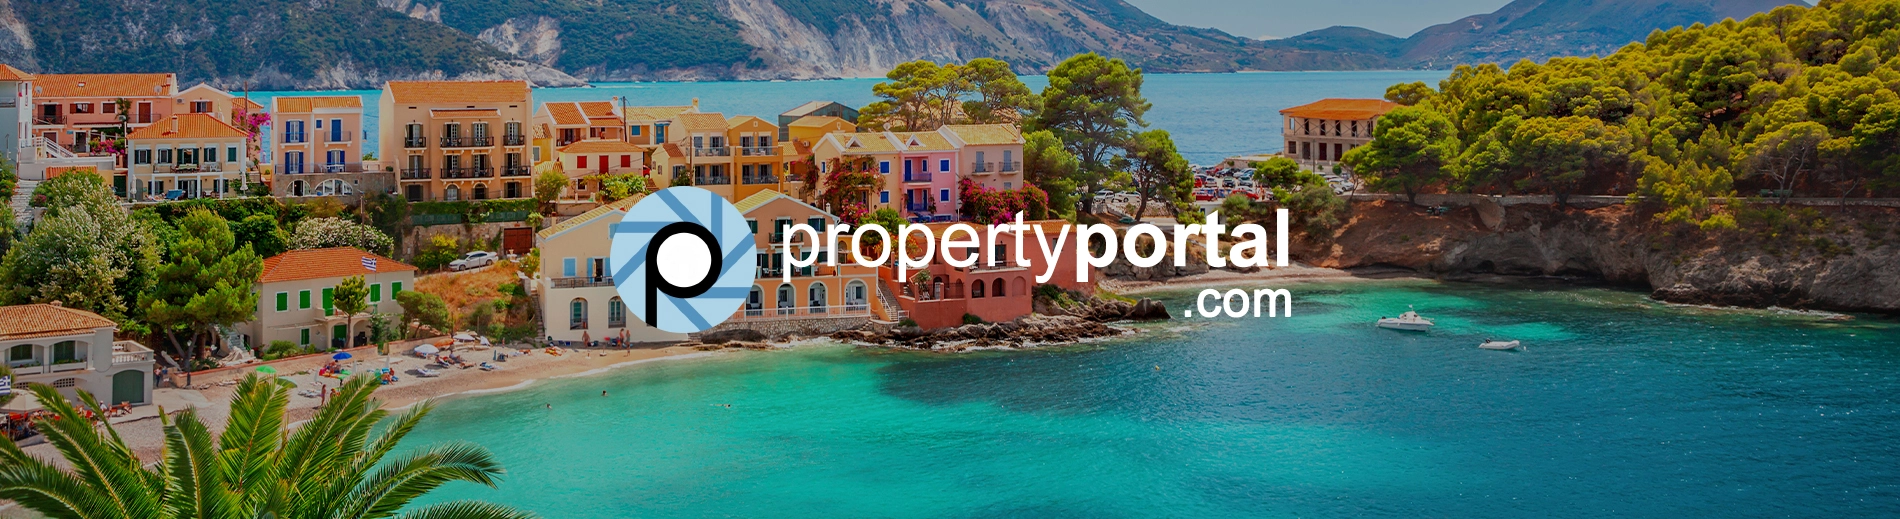 Property Portal Case Study title image for website design project